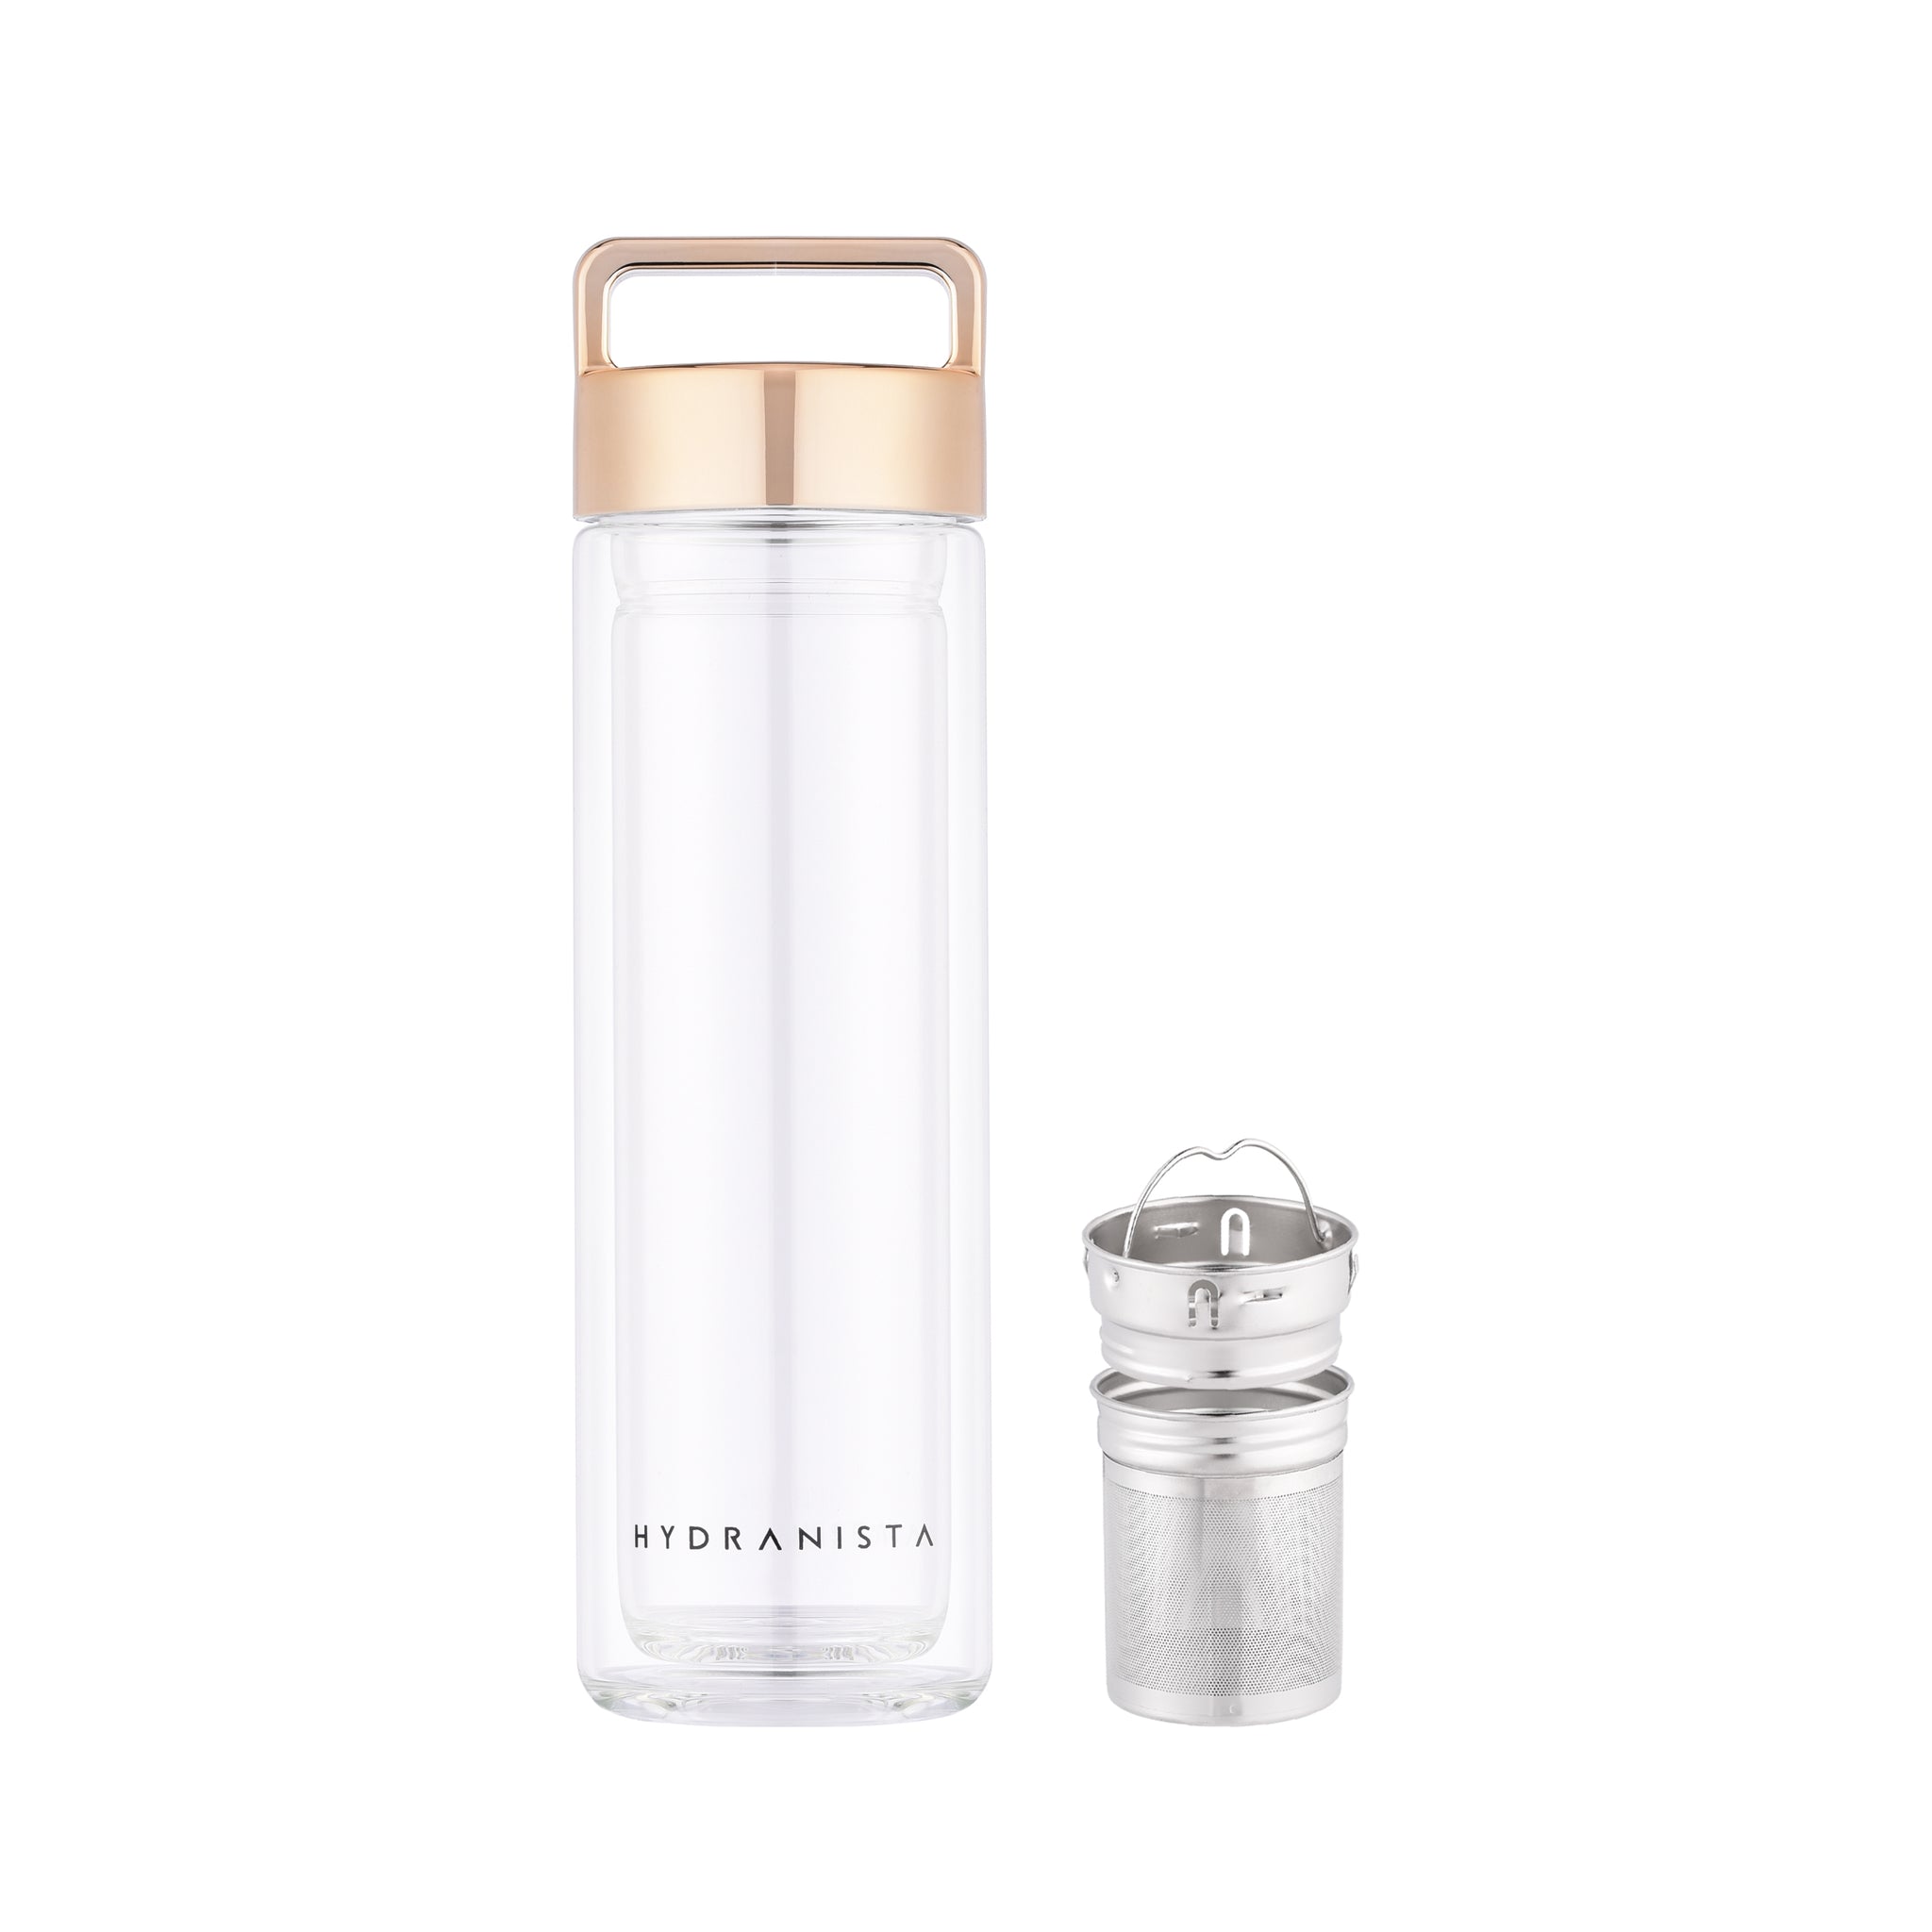 Water bottle glass gold lid Hydranista borosilicate stylish elegant tea strainer infused water sleeve